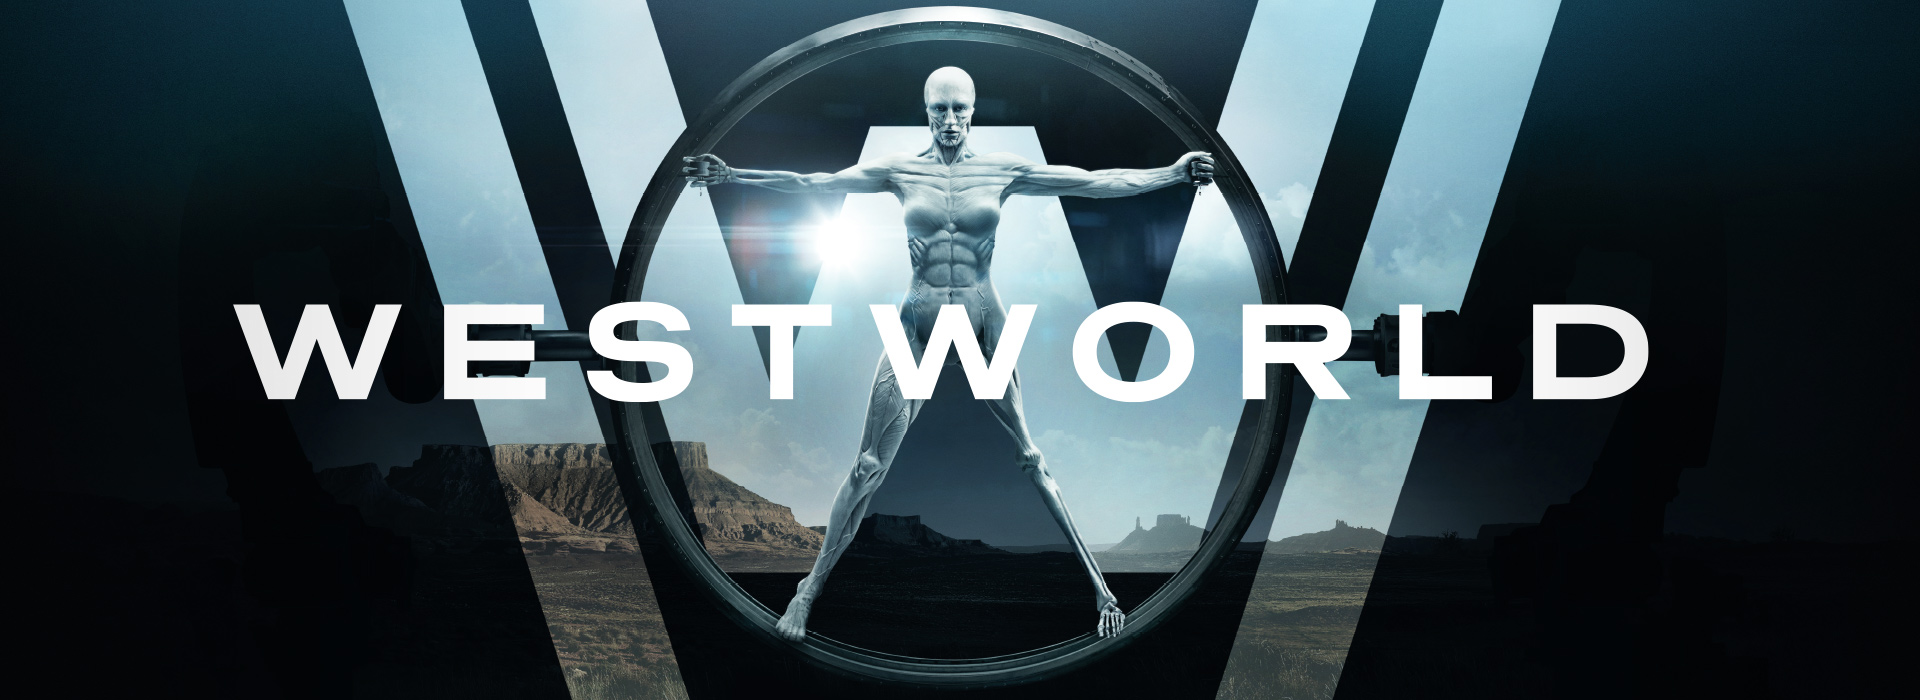 westworld-poster-1